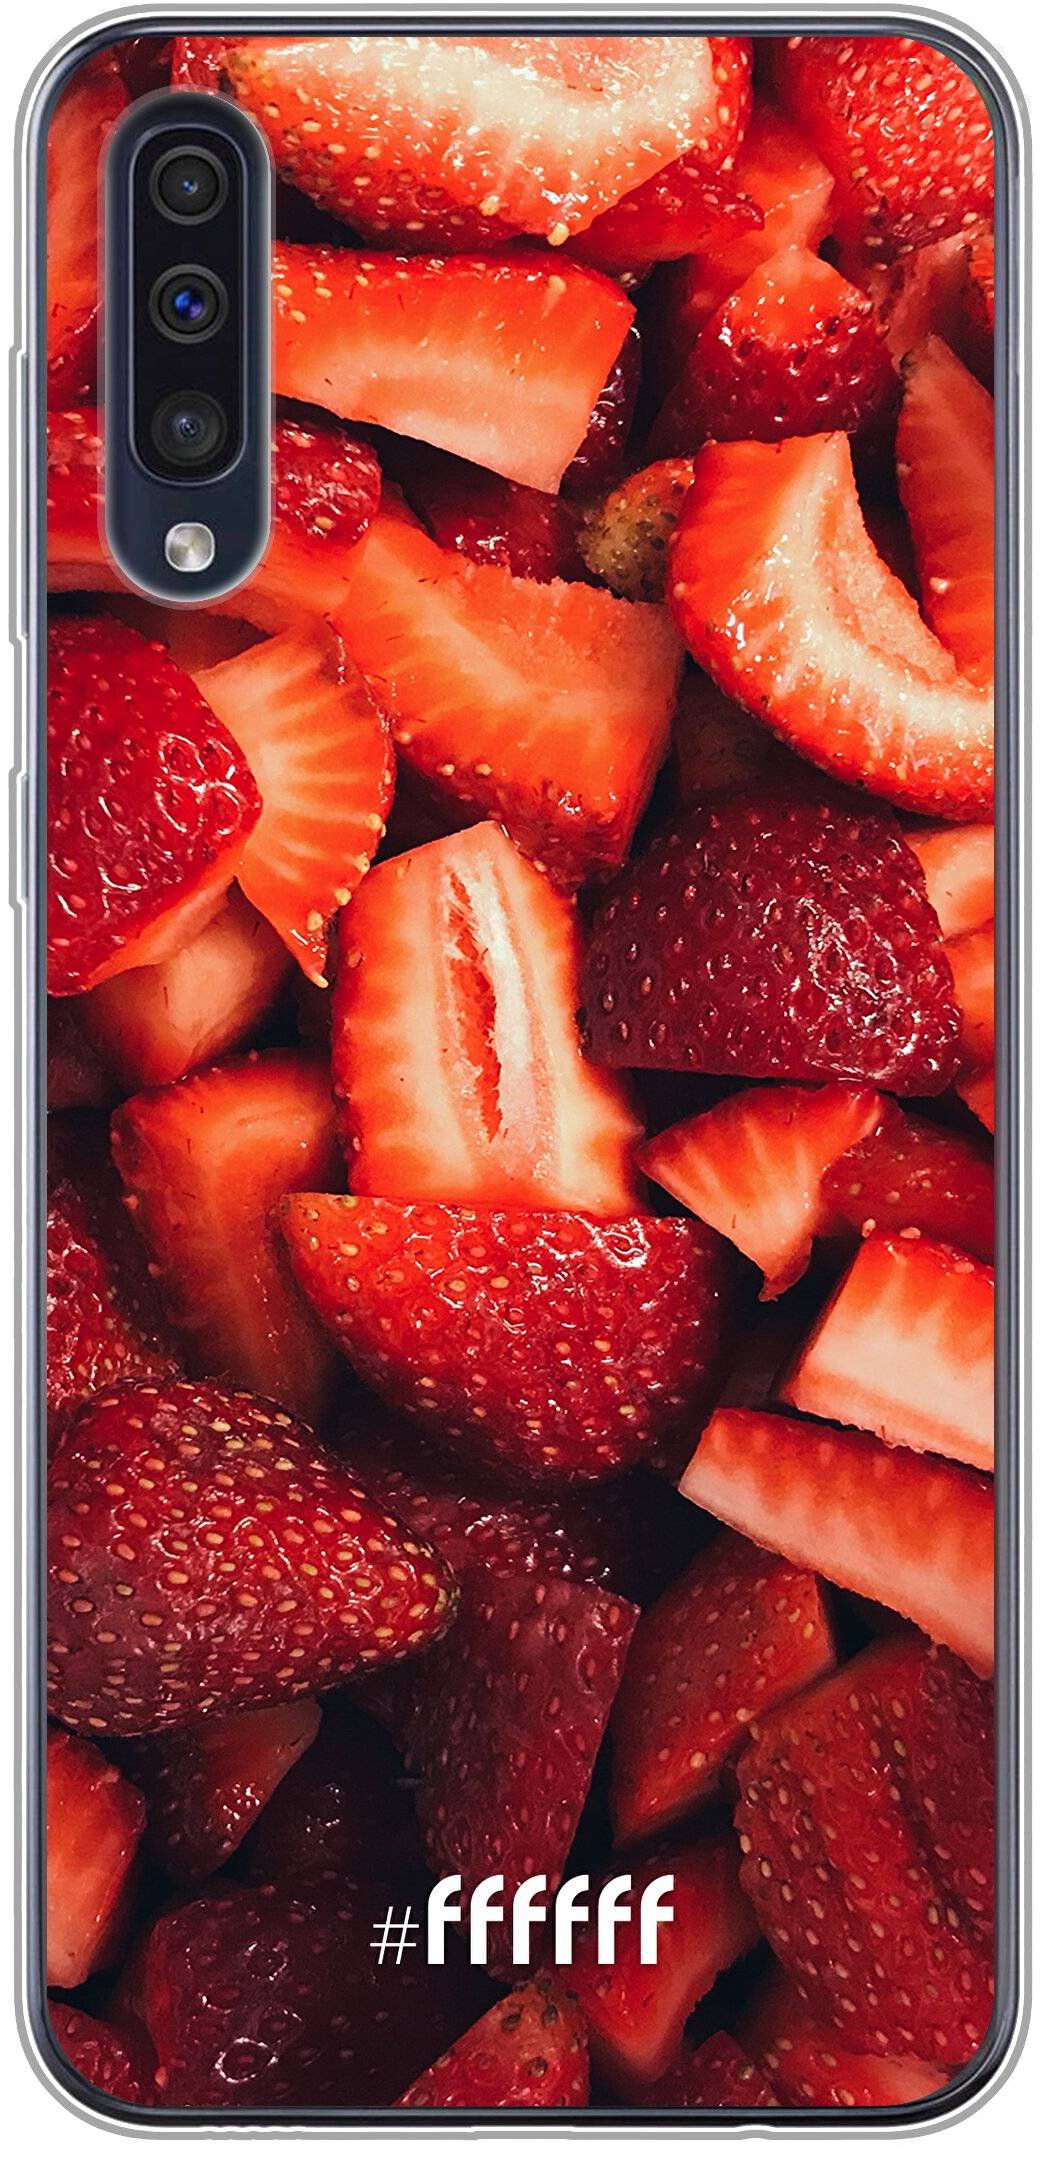 Strawberry Fields Galaxy A50